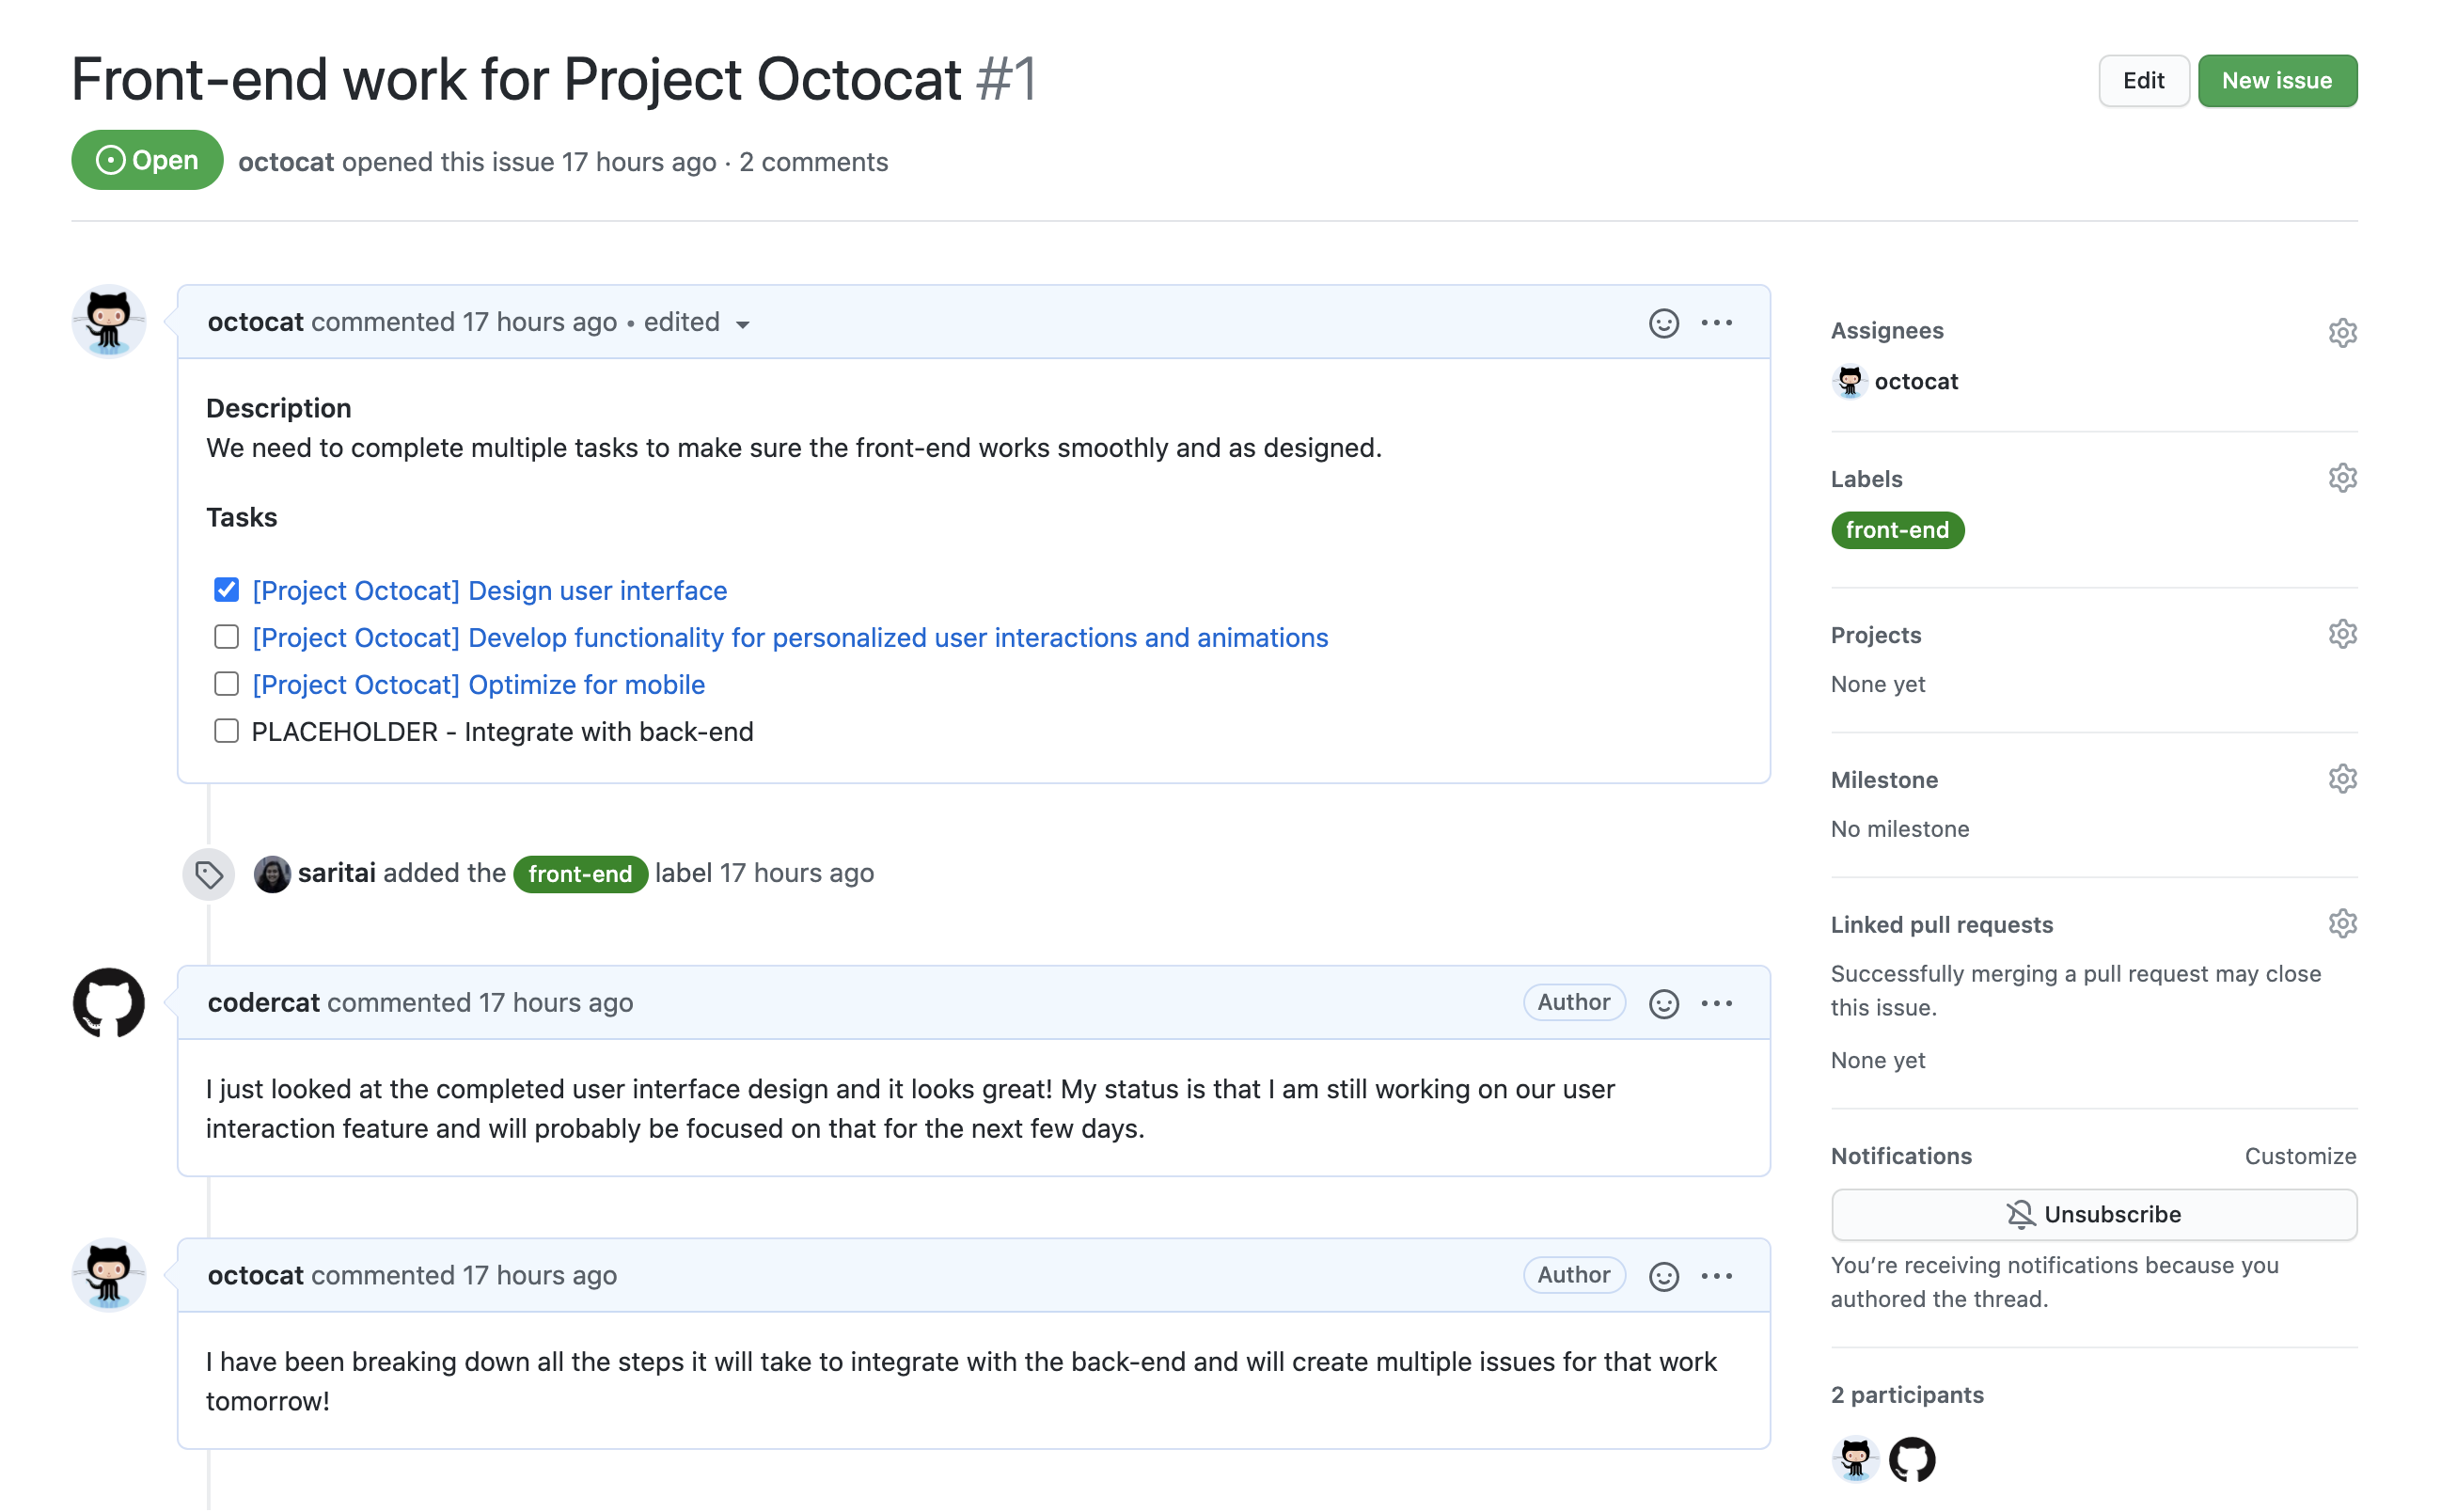 "Project Octocat에 대한 프런트 엔드 작업"이라는 문제의 스크린샷 둘 다 @codercat 의 주석과 @octocat 작업에 대한 상태 업데이트를 제공합니다.